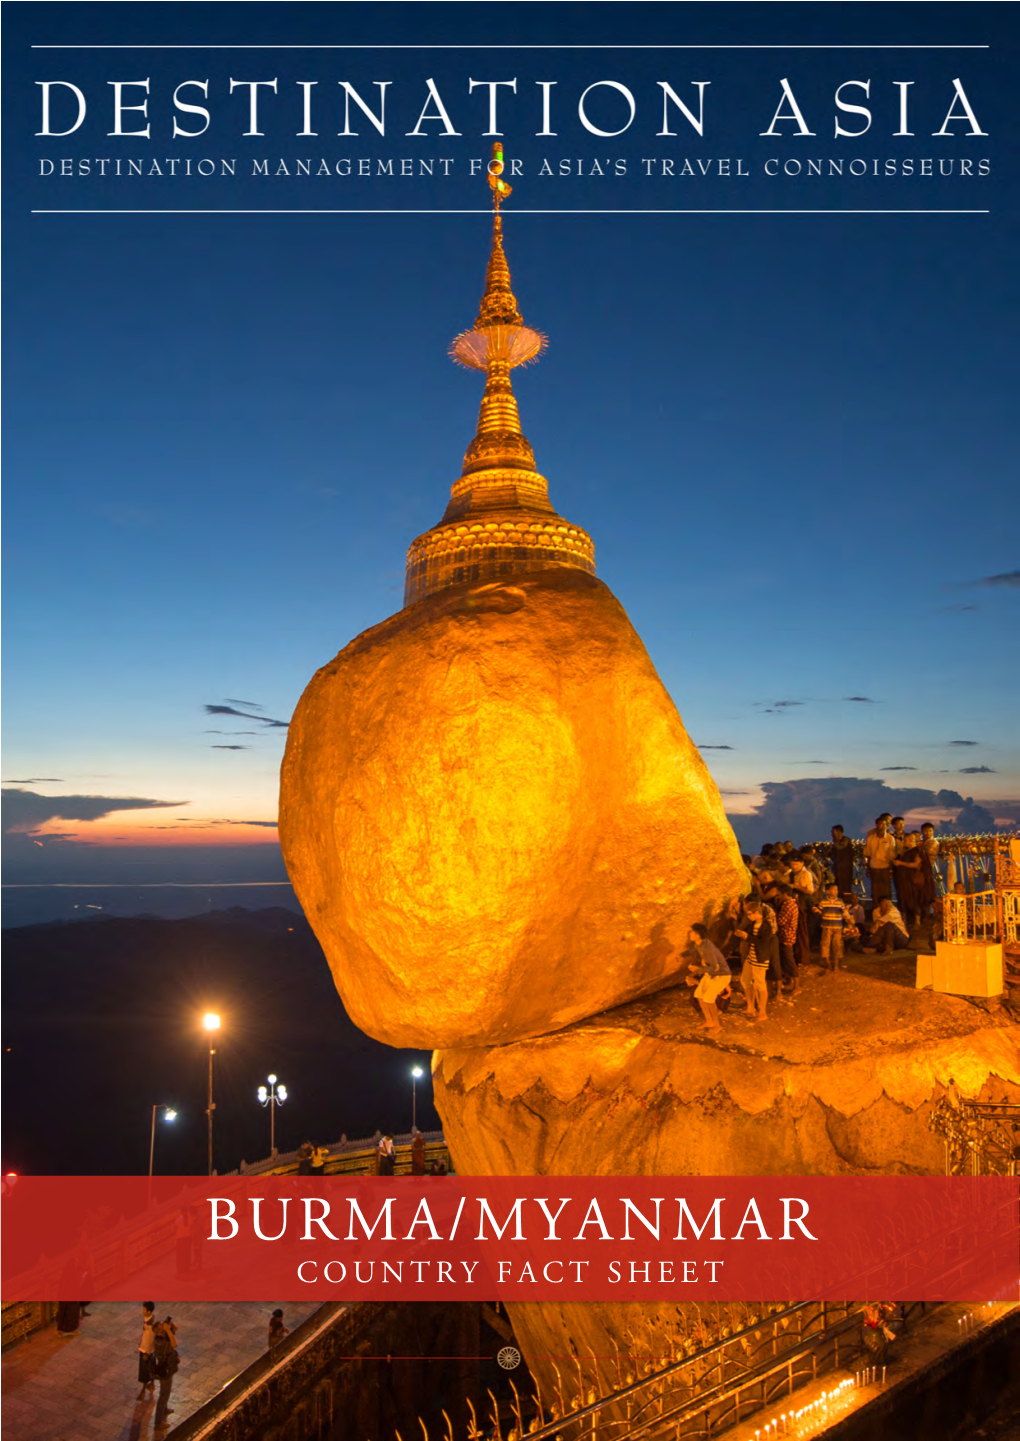 Burma/Myanmar Country Fact Sheet About Burma/Myanmar